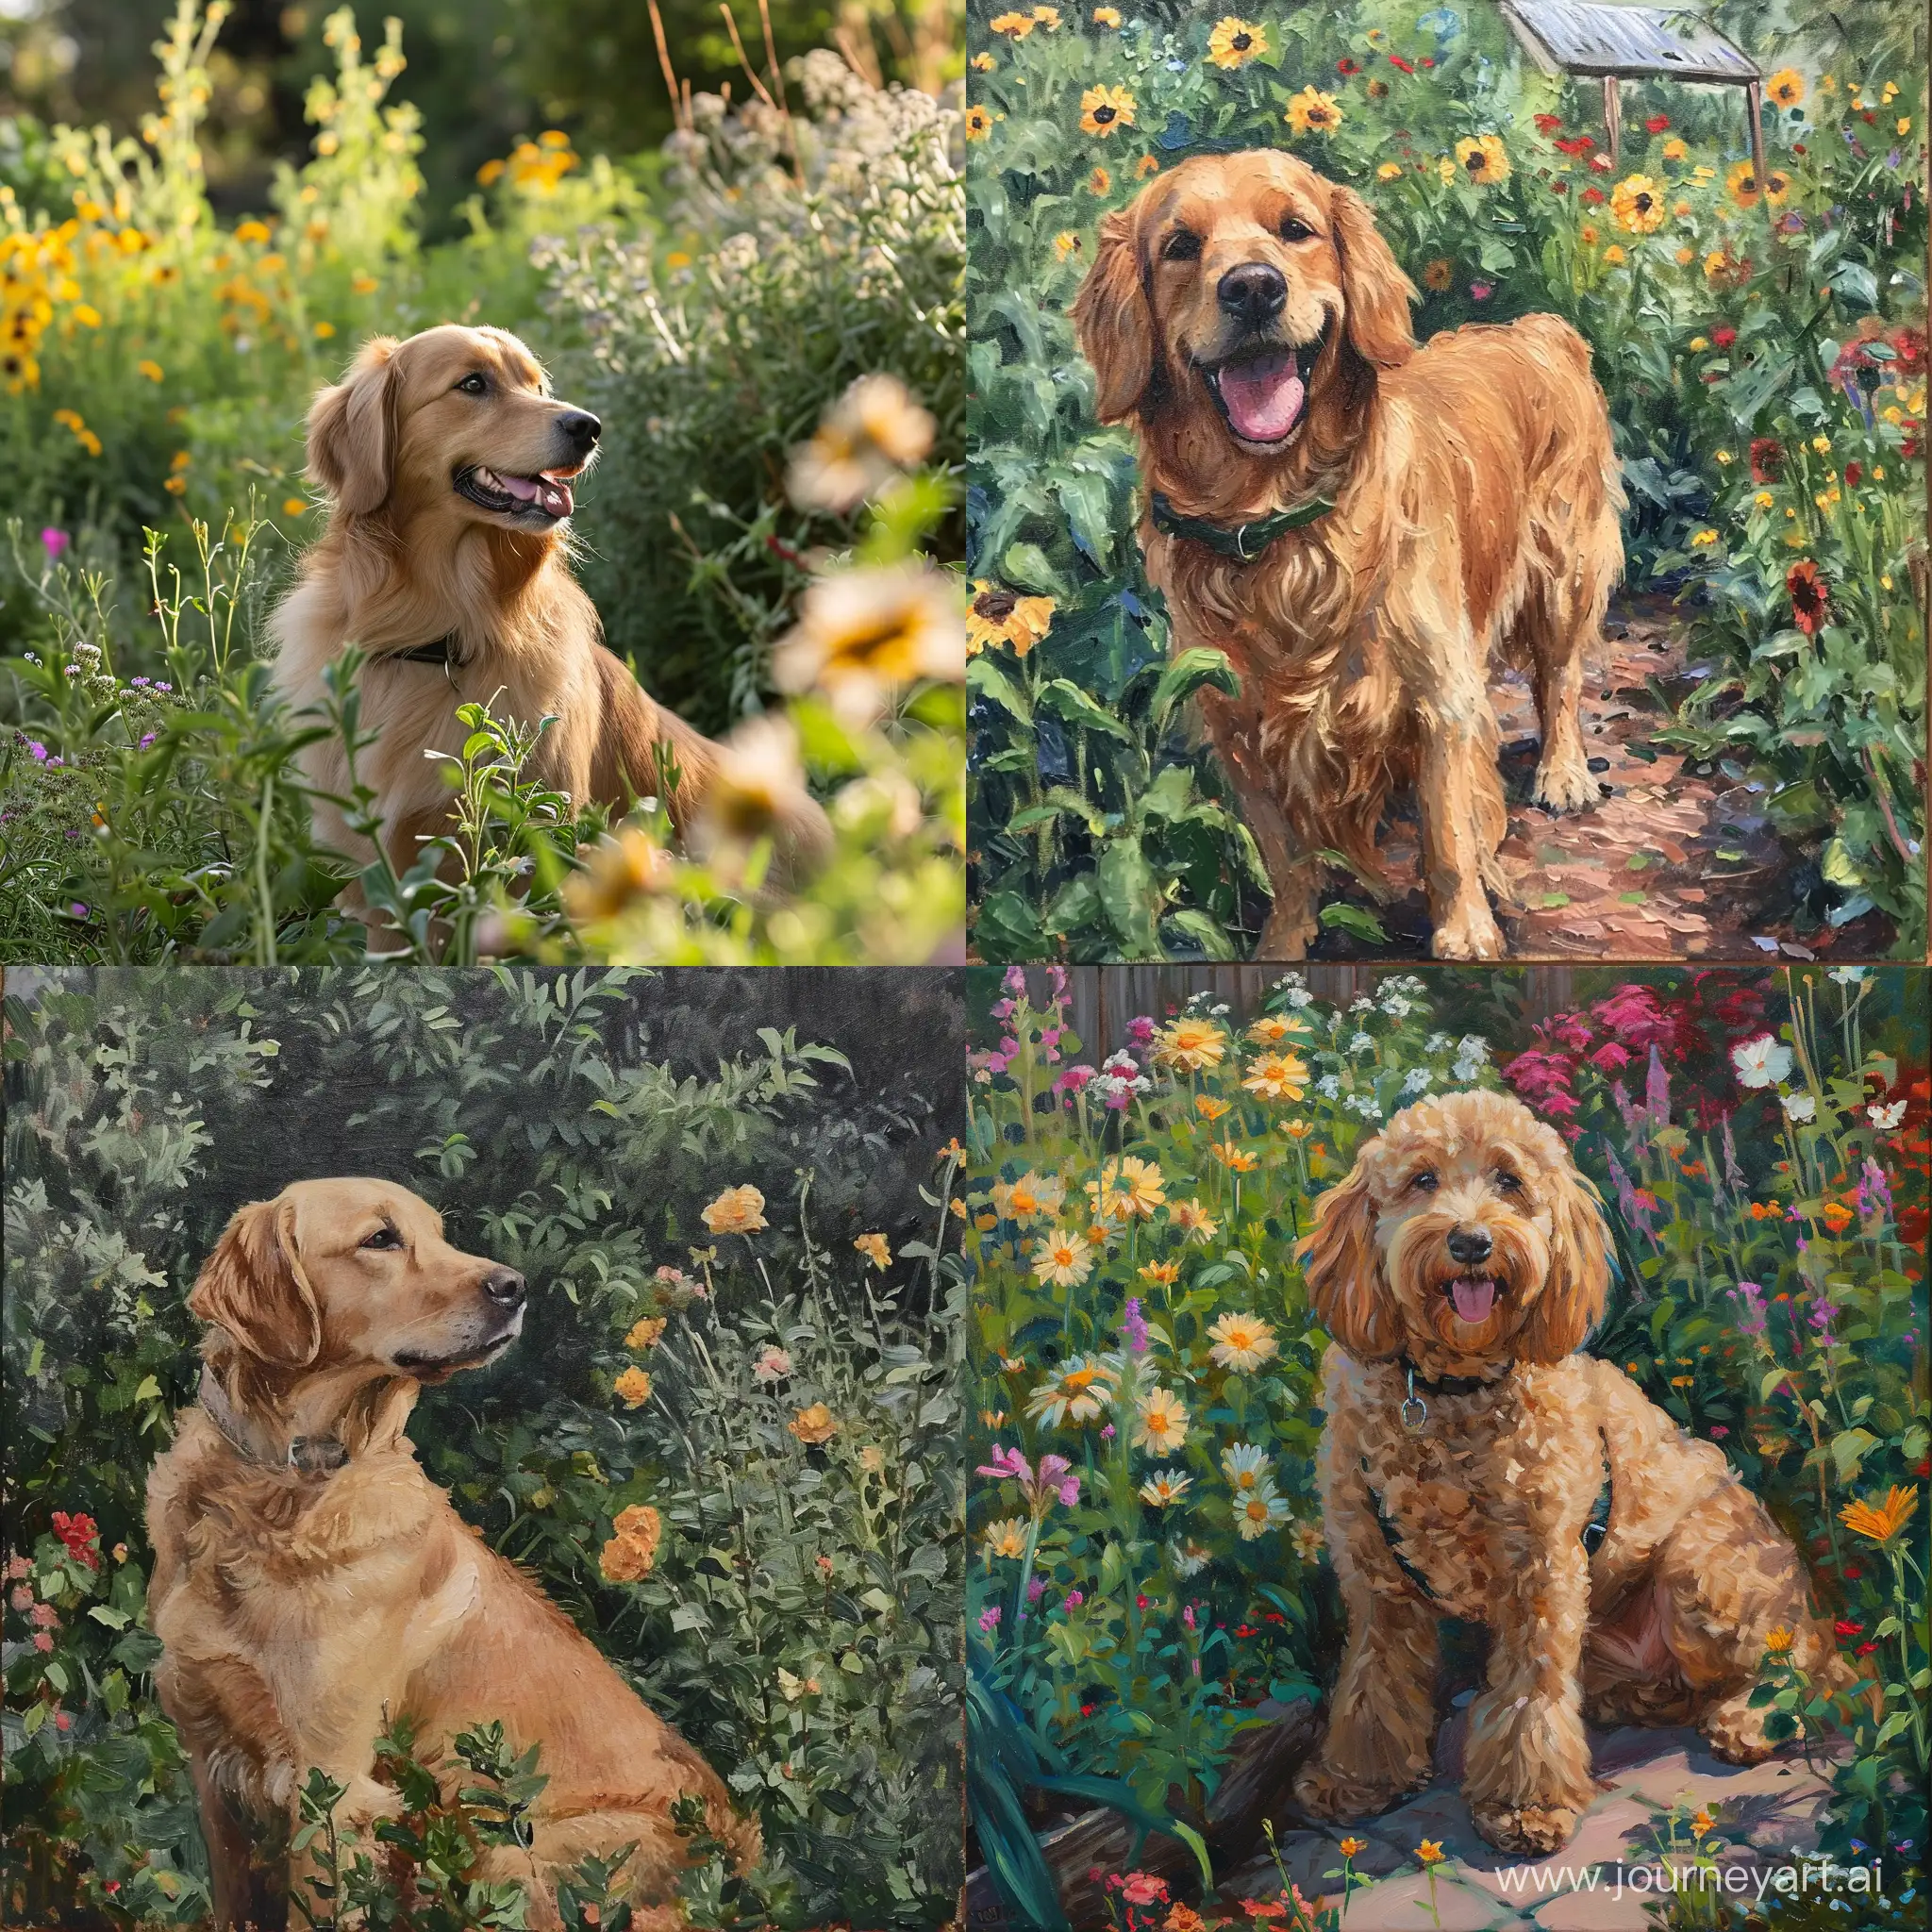 Playful-Dog-Enjoying-Garden-Fun